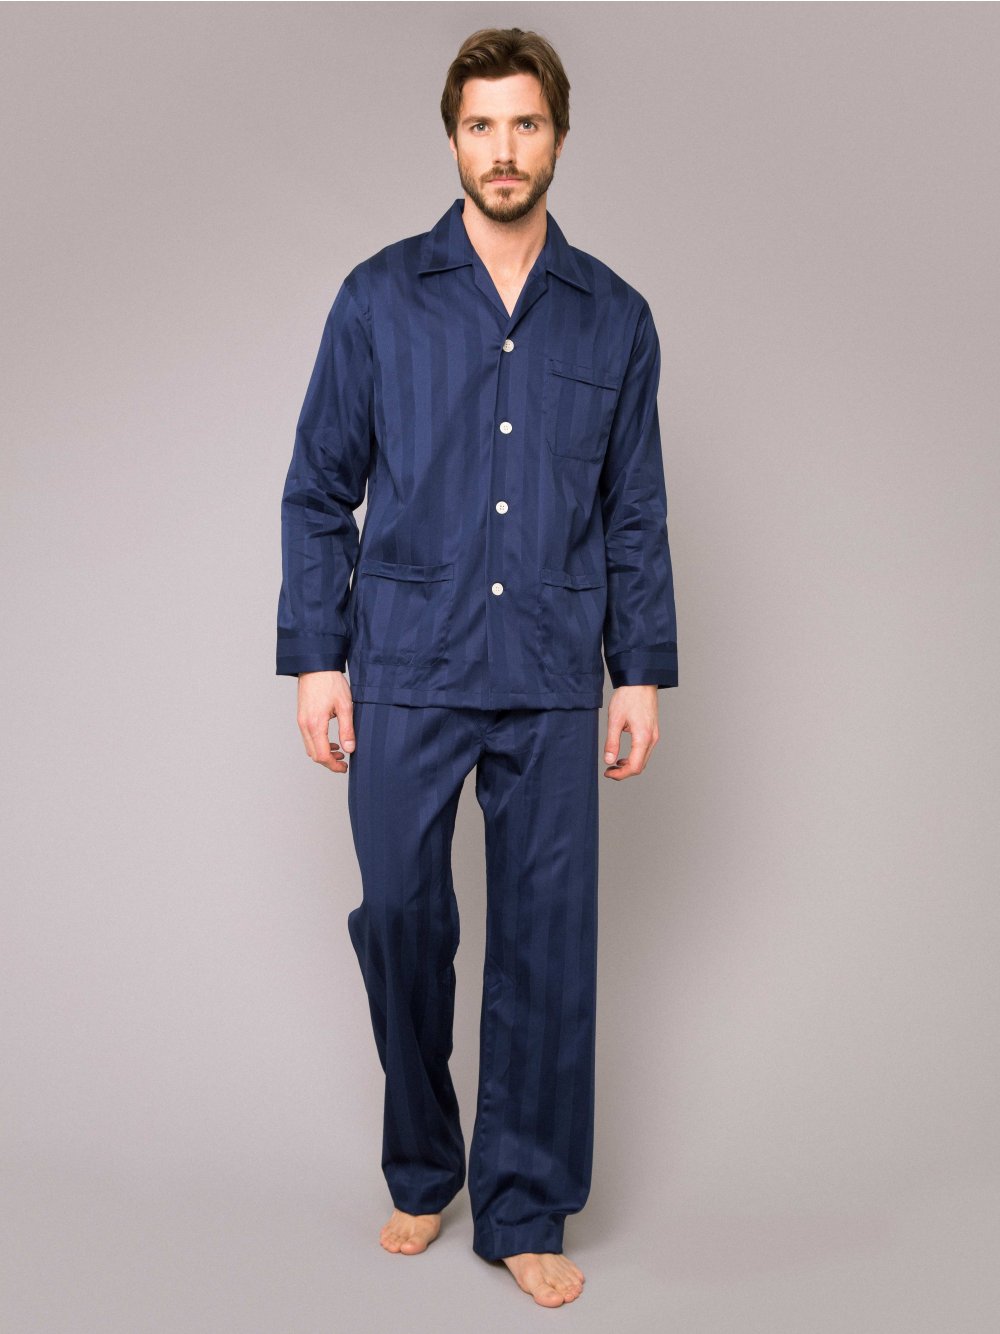 NWT Derek Rose Classic Pajamas Navy Size Medium Retail $275 As Worn by Frank  Underwood! | Styleforum